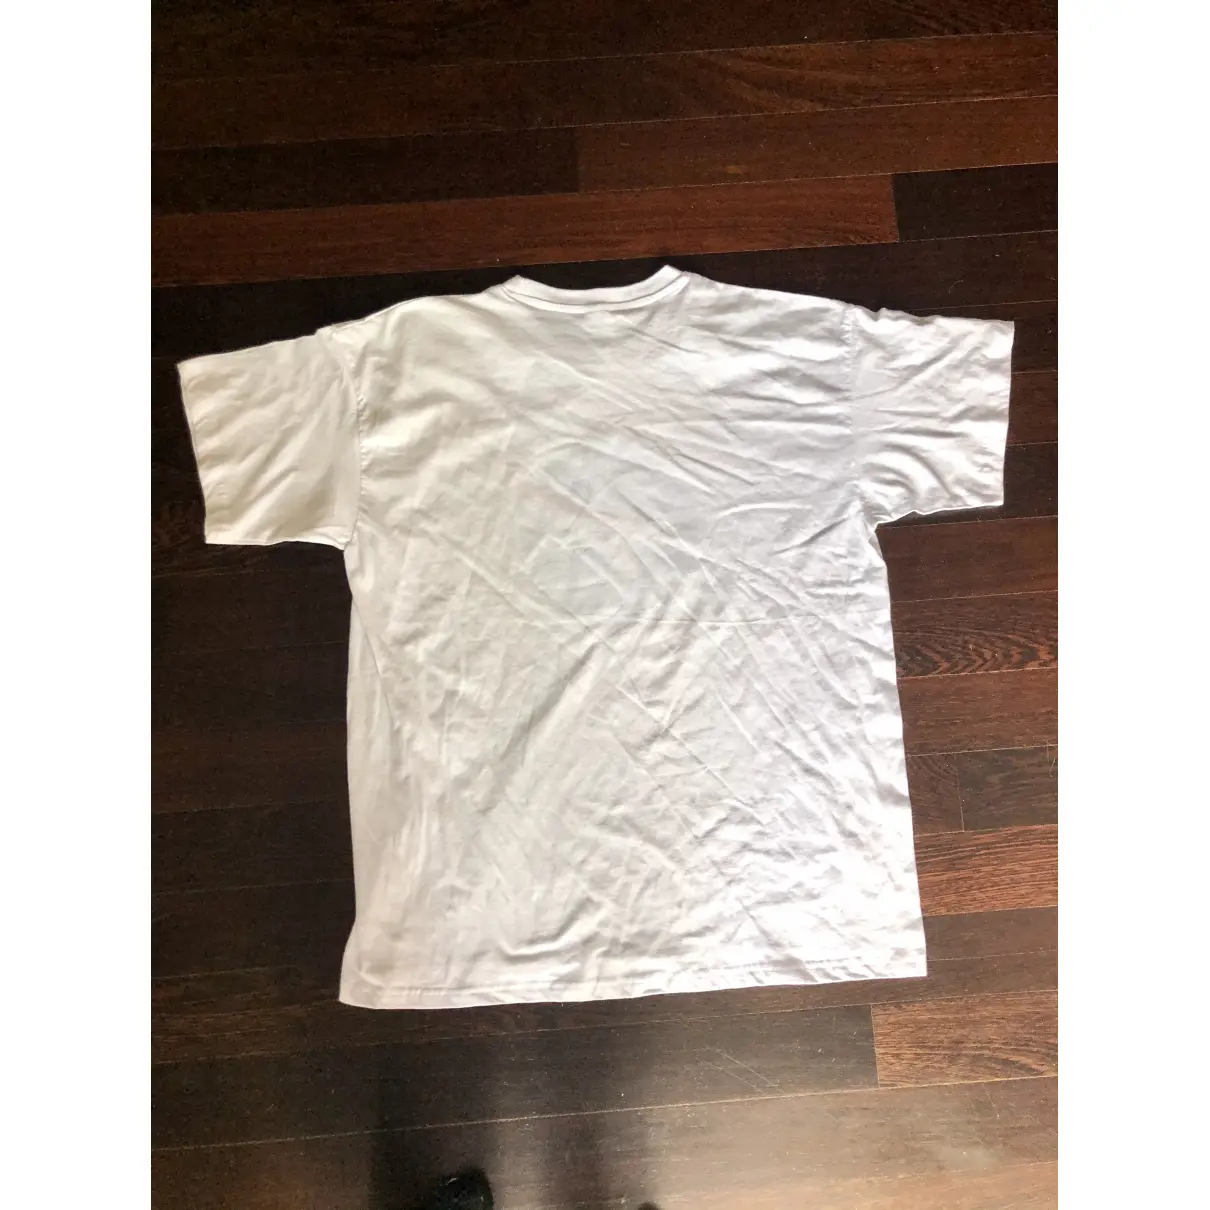 Buy Nasa Seasons White Cotton T-shirt online